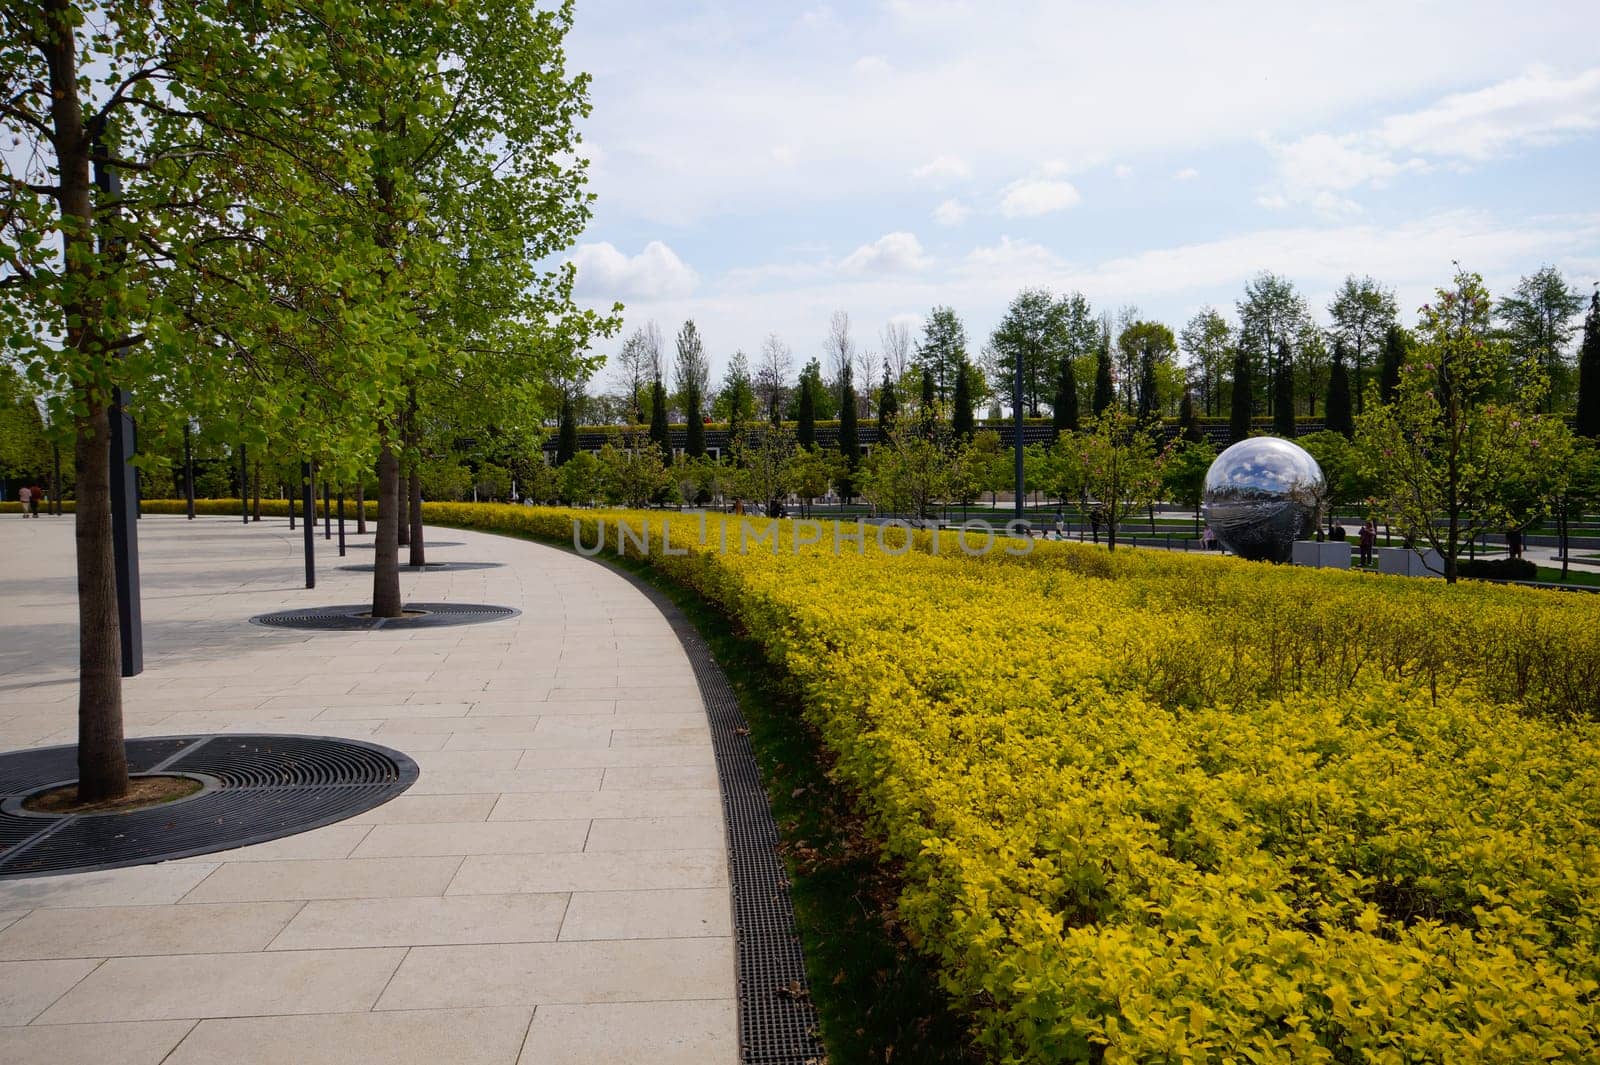 City park Krasnodar. Concrete path in the park. Urban environment.